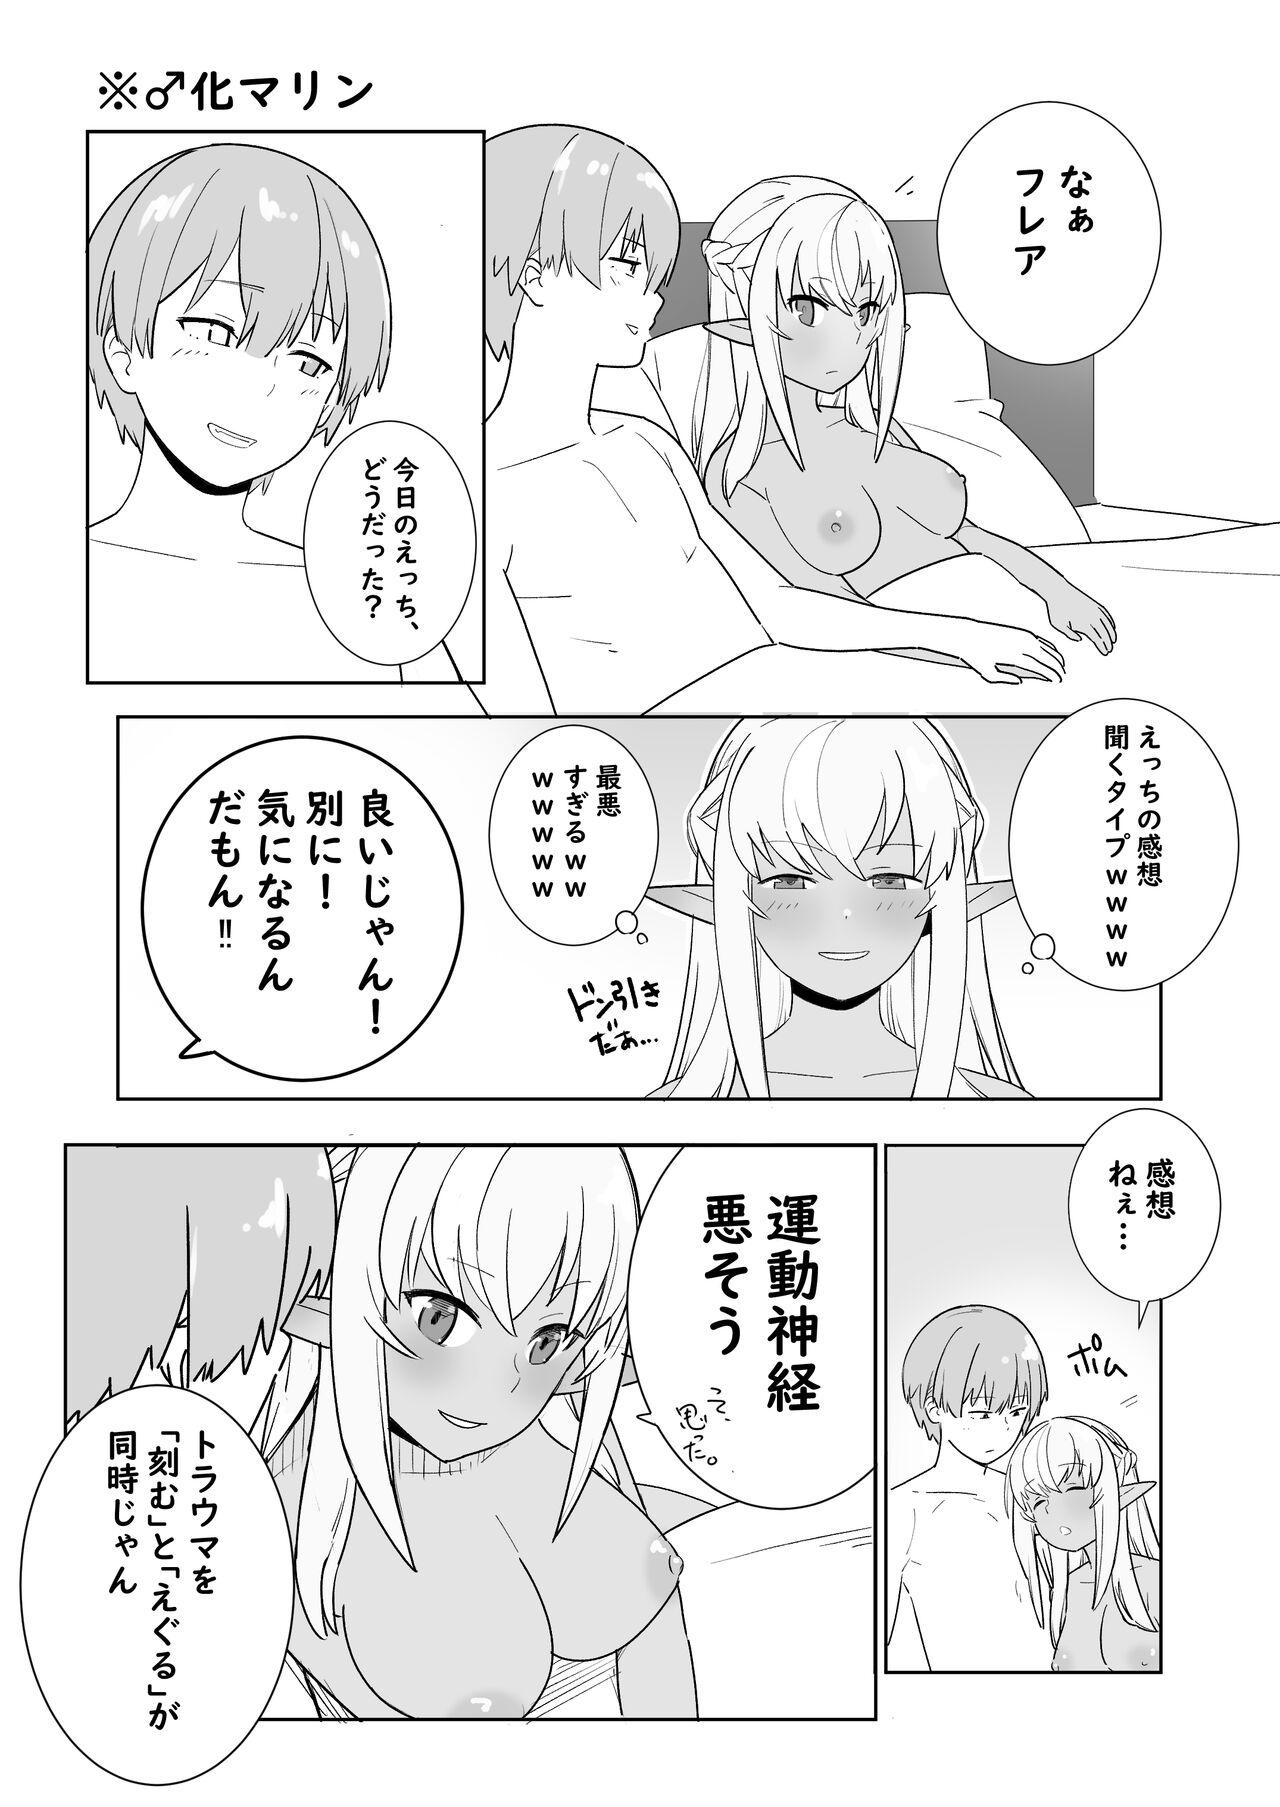 Lolicon Twitter Short Manga - Hololive Male - Page 8